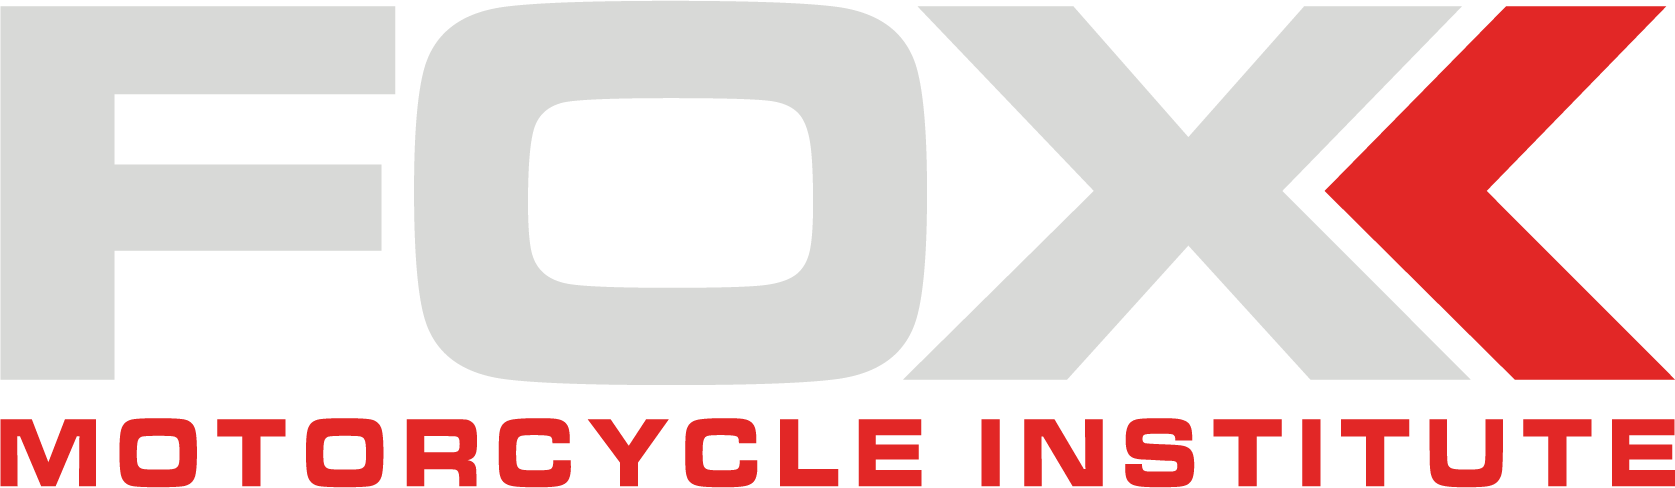 Fox Motorcycle Institute